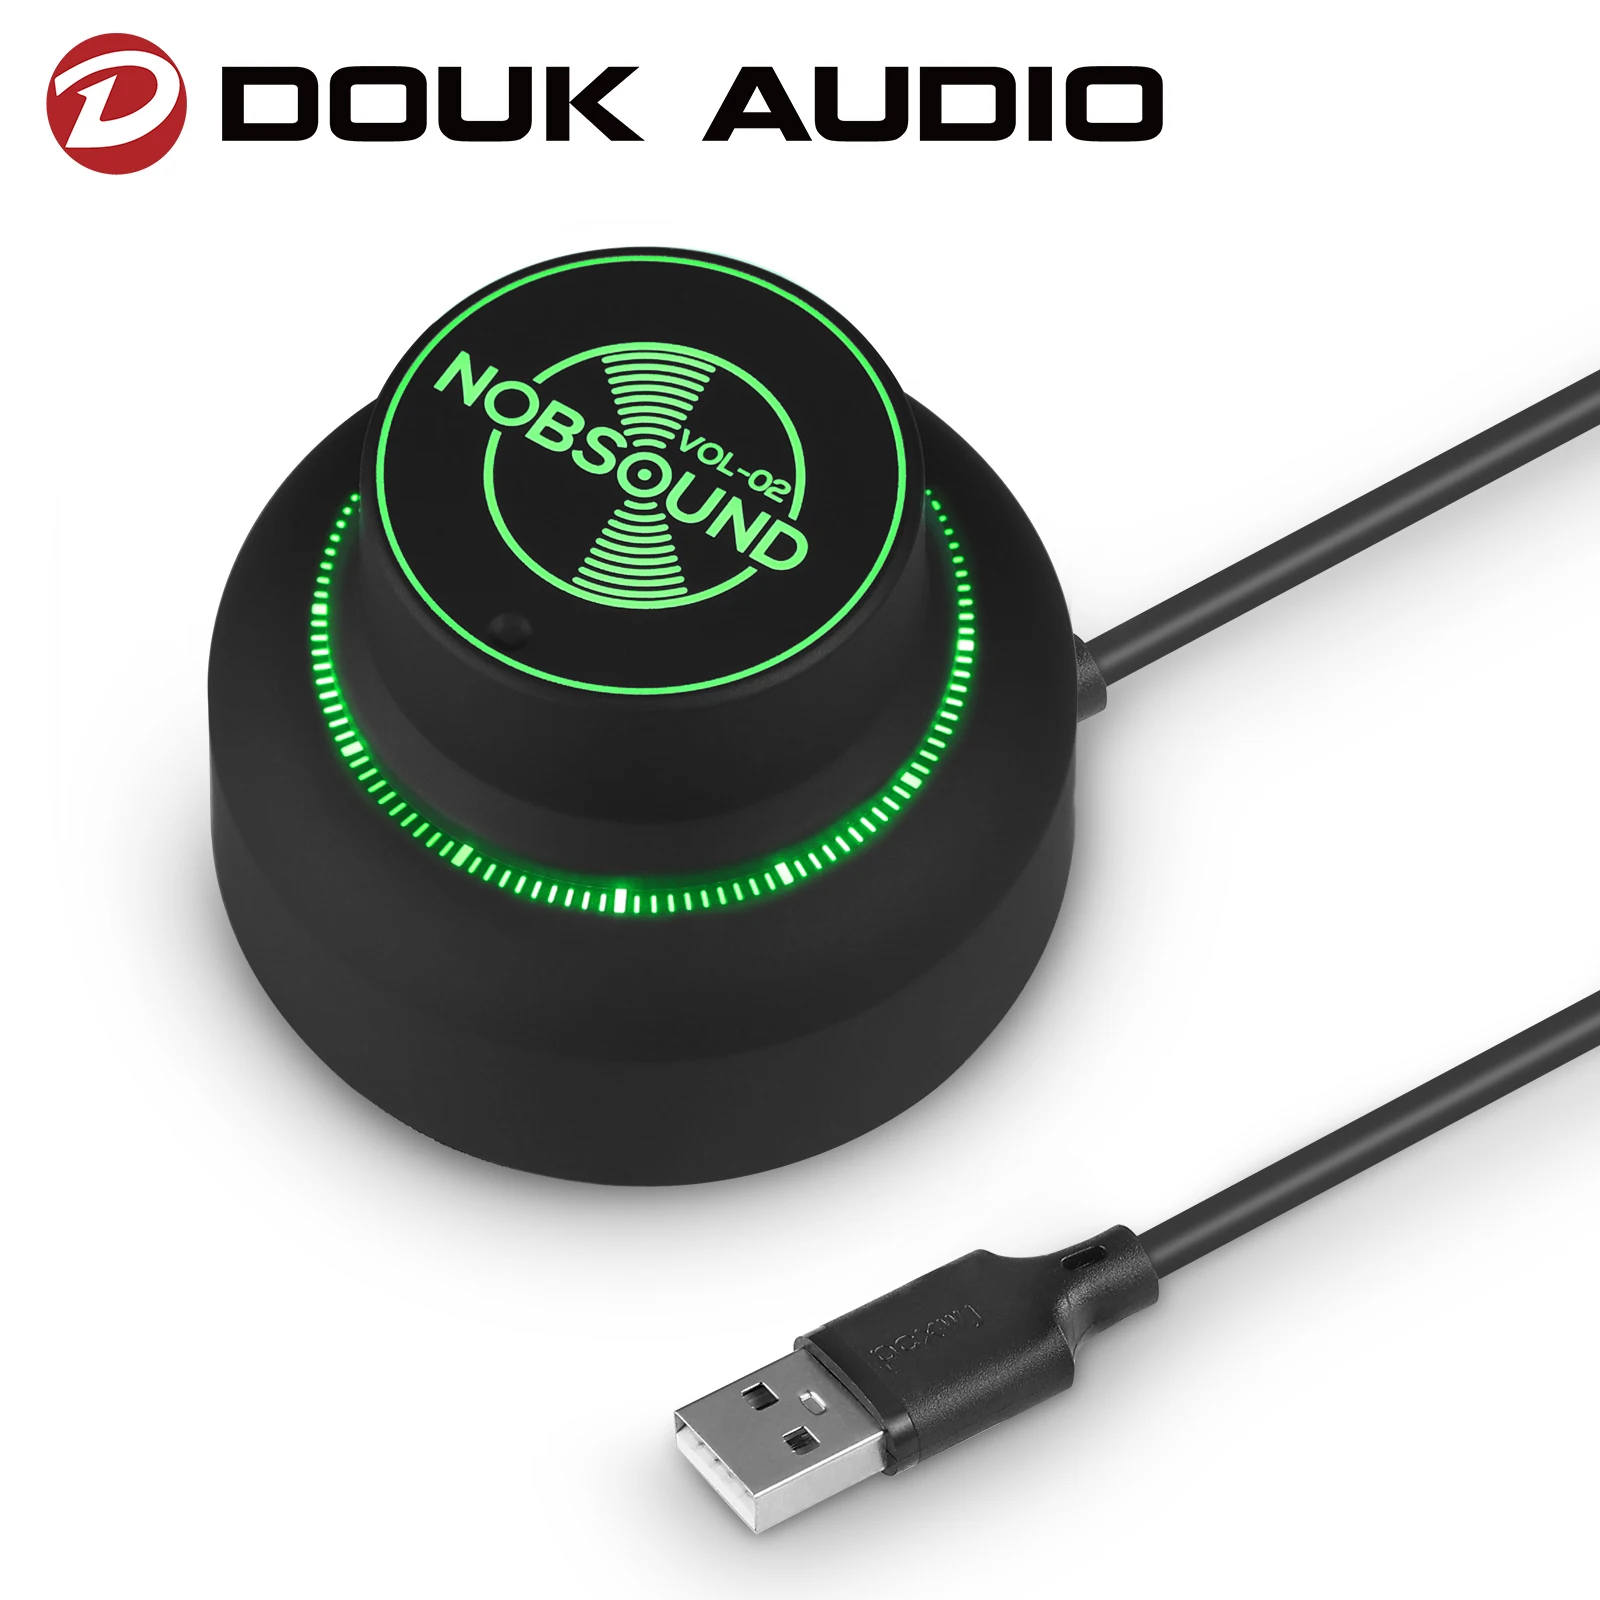 Douk Audio USB Volume Controller Computer Speaker Audio Multimedia Volume Remote Control Adjuster Win7/8/10/XP/Mac/Vista/Android